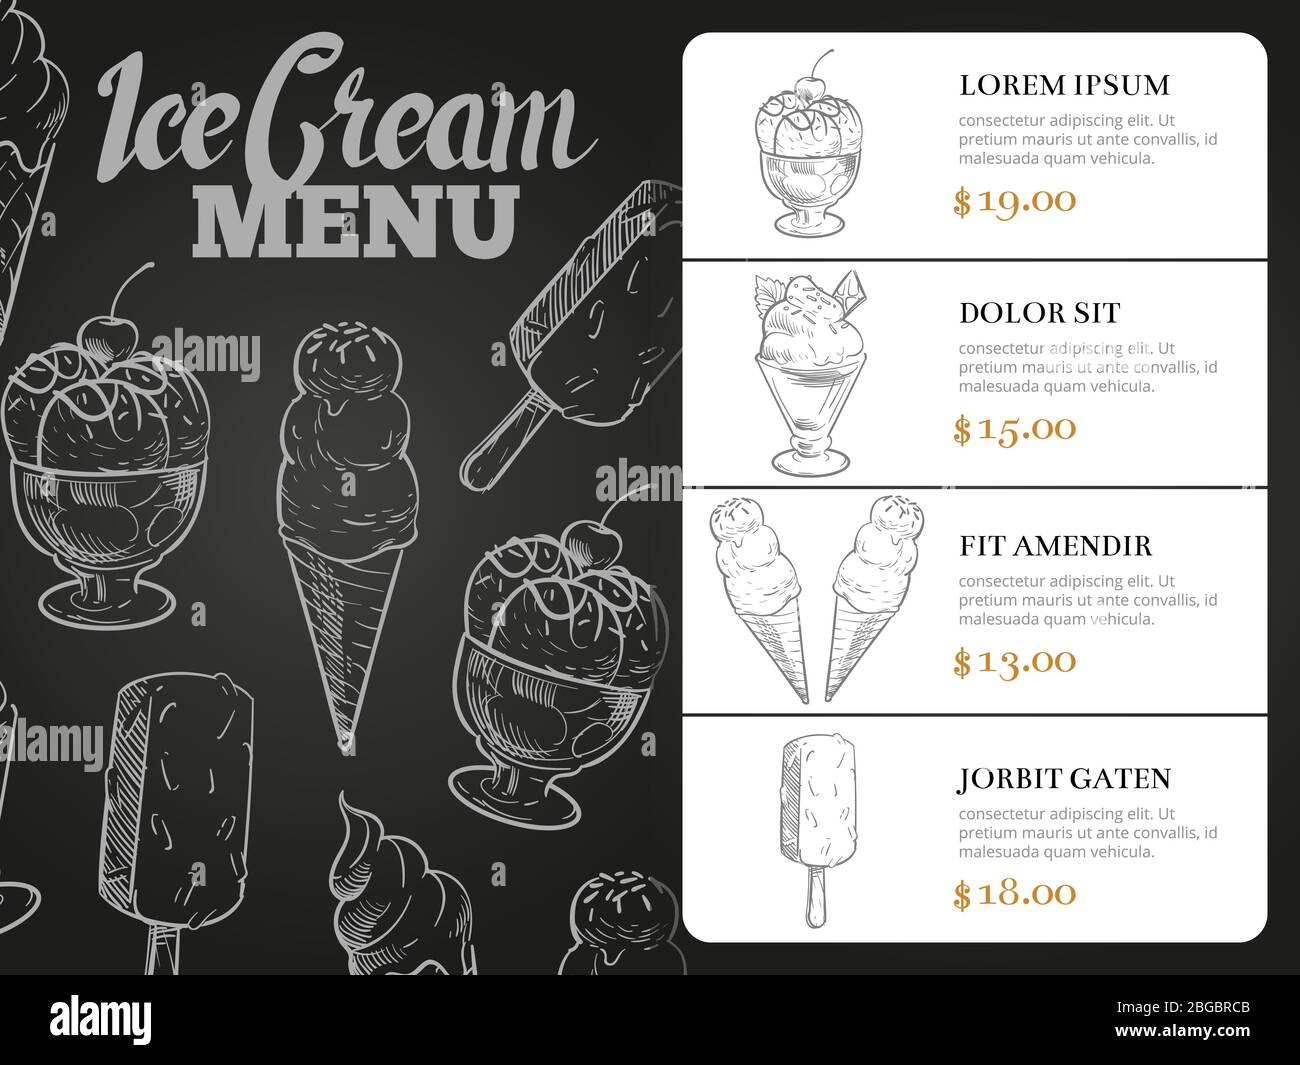 Ice cream menu with prices - desserts blackboard menu card. Vector illustration Stock Vector